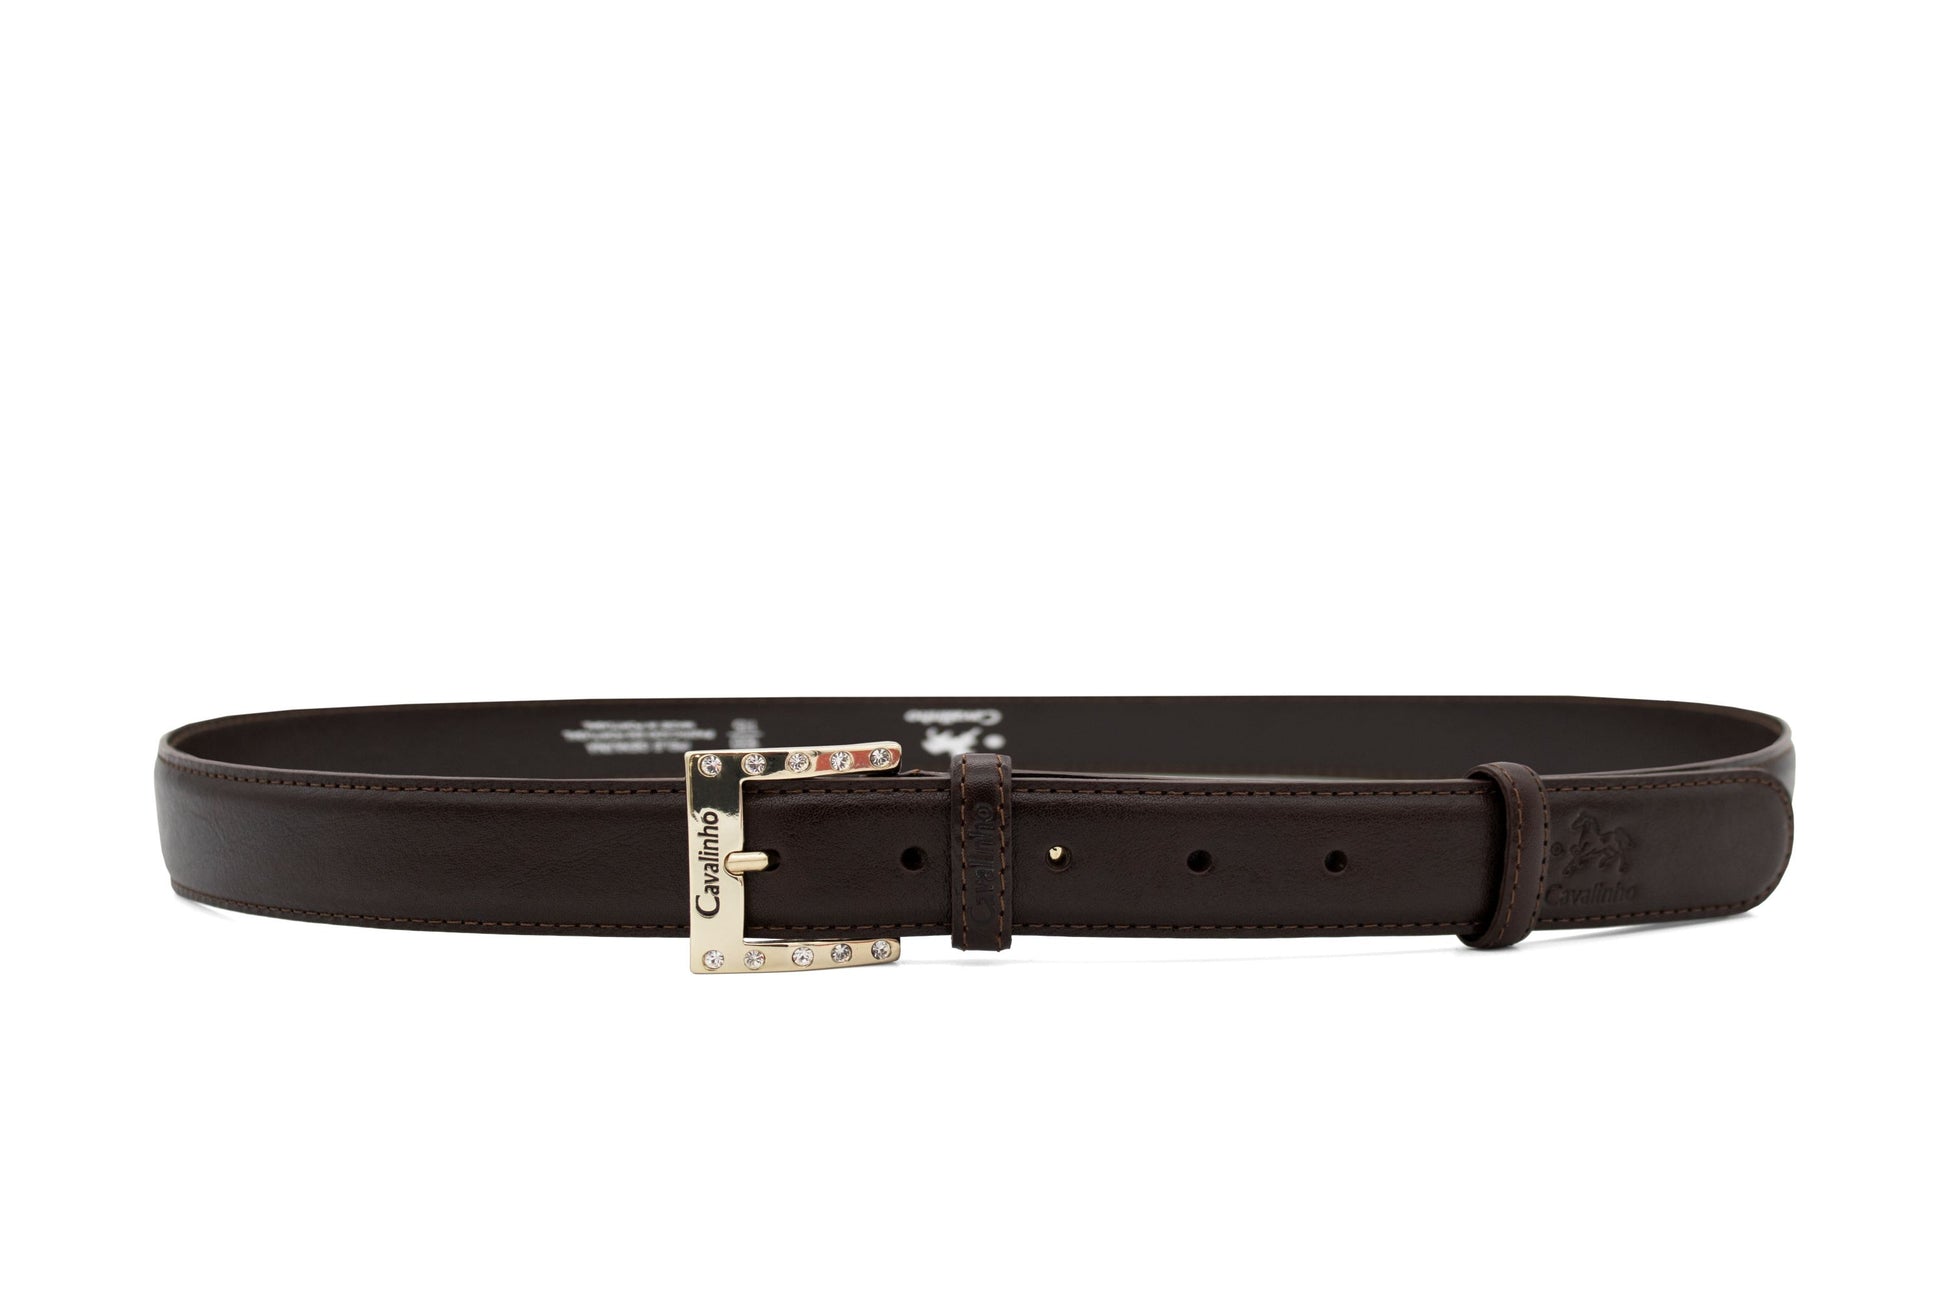 Cavalinho Classic Leather Belt - Brown Gold - 58010905.02_1_d5a73f4b-9daf-4c9b-9d69-3a324442ad9b